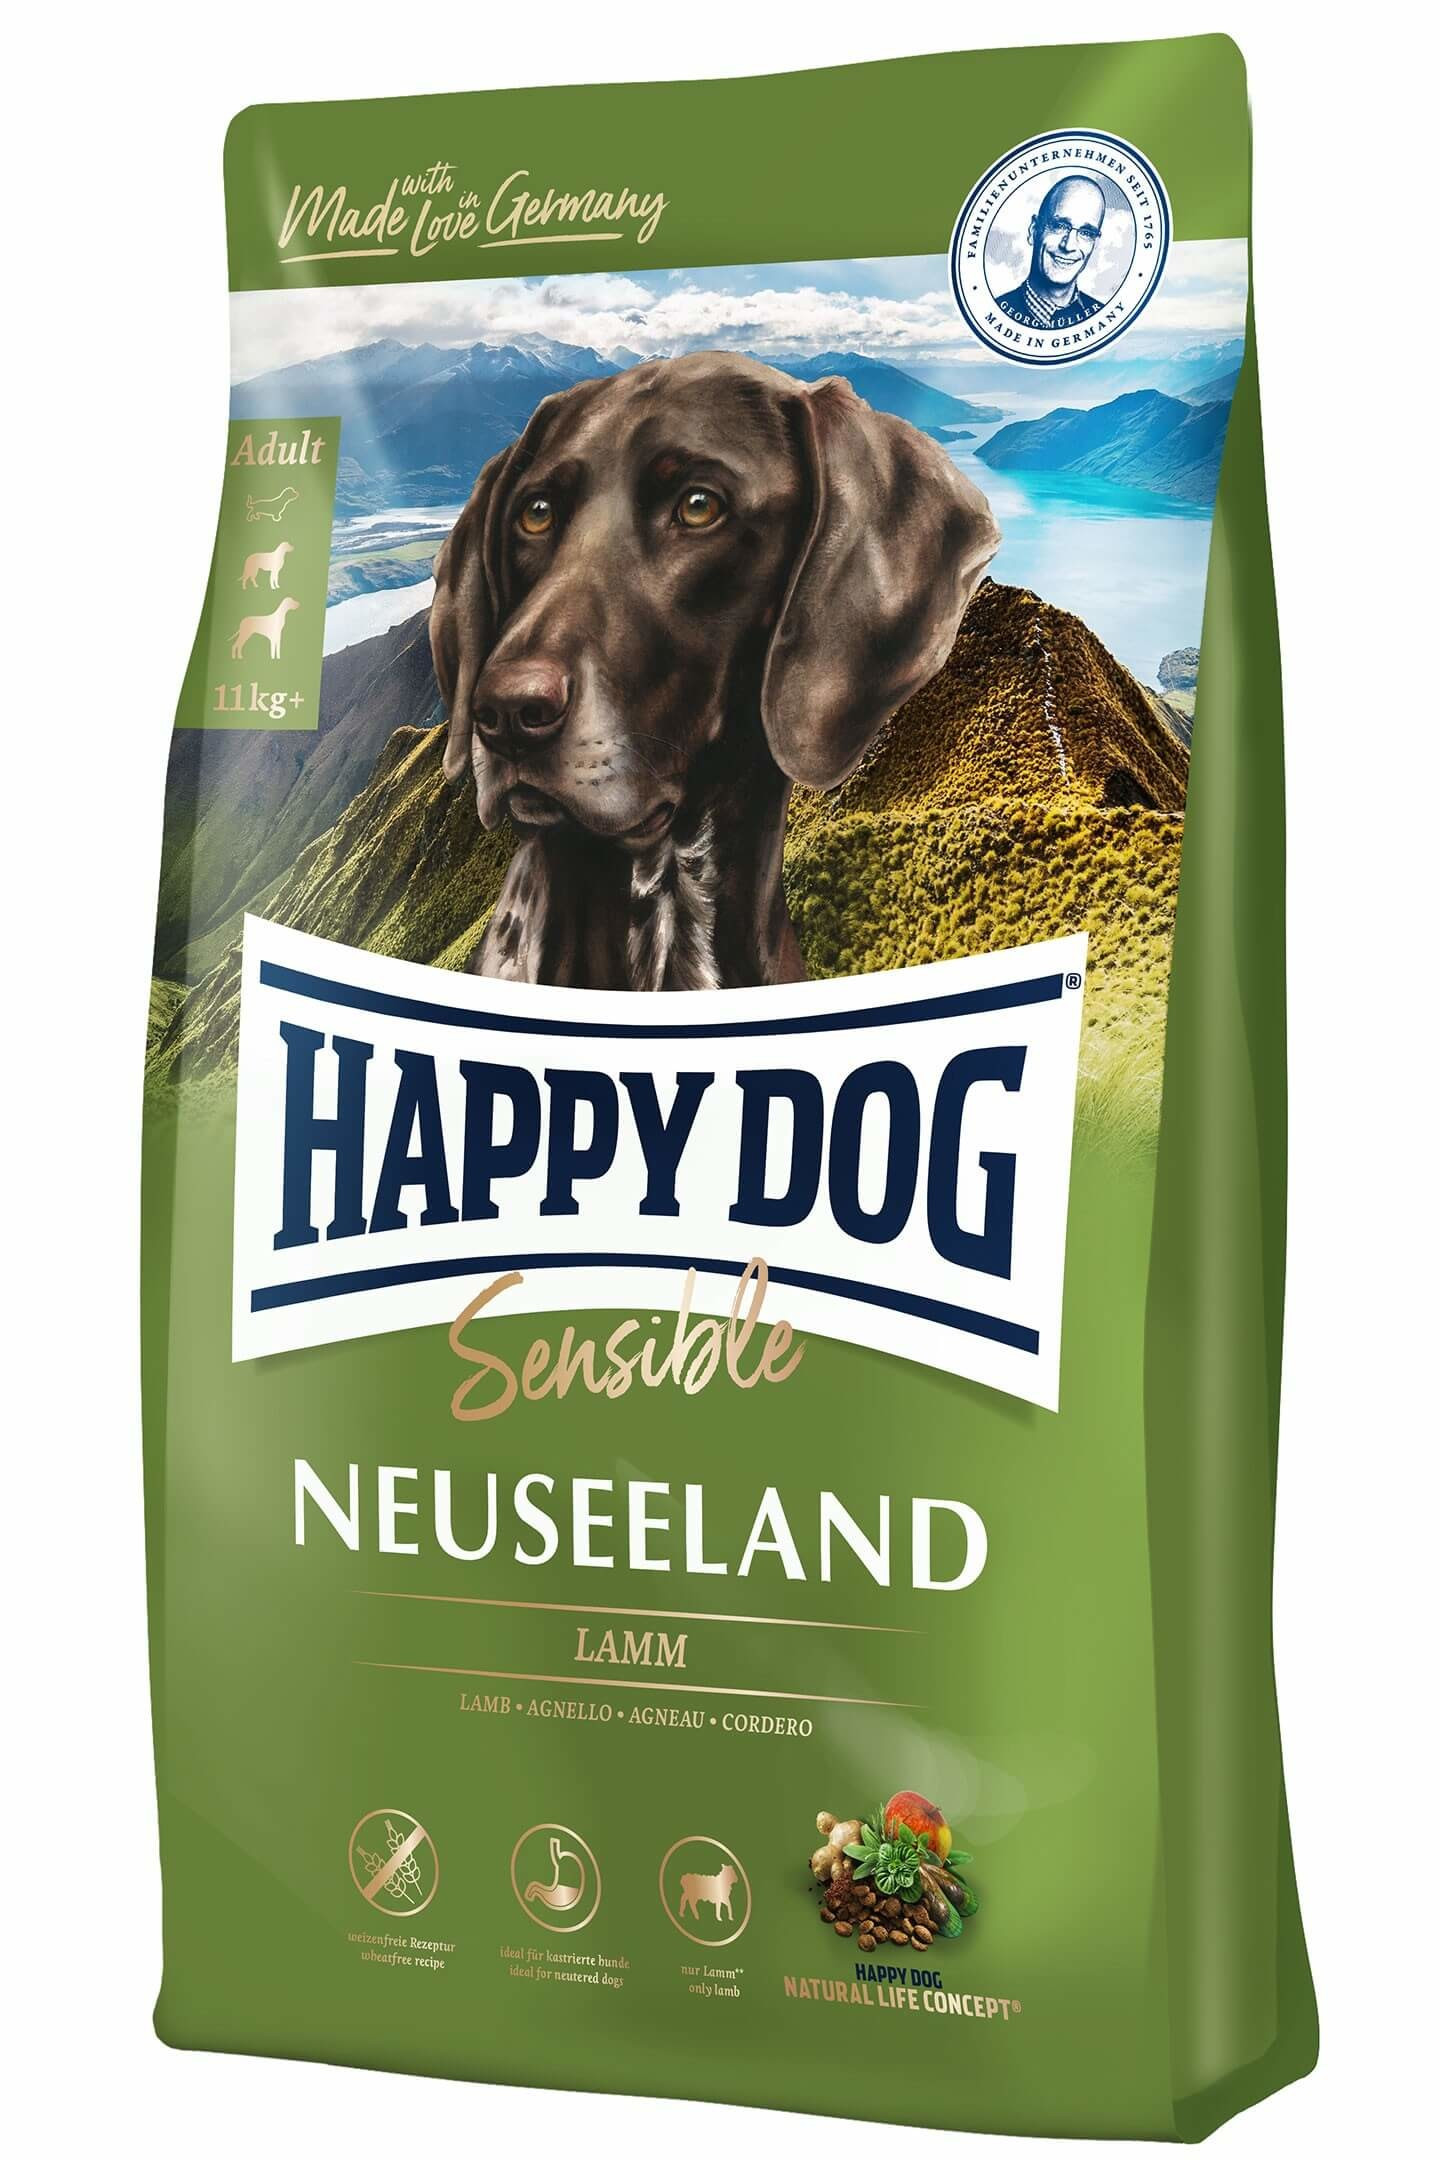 Happy Dog Supreme Nuova Zelanda per cane